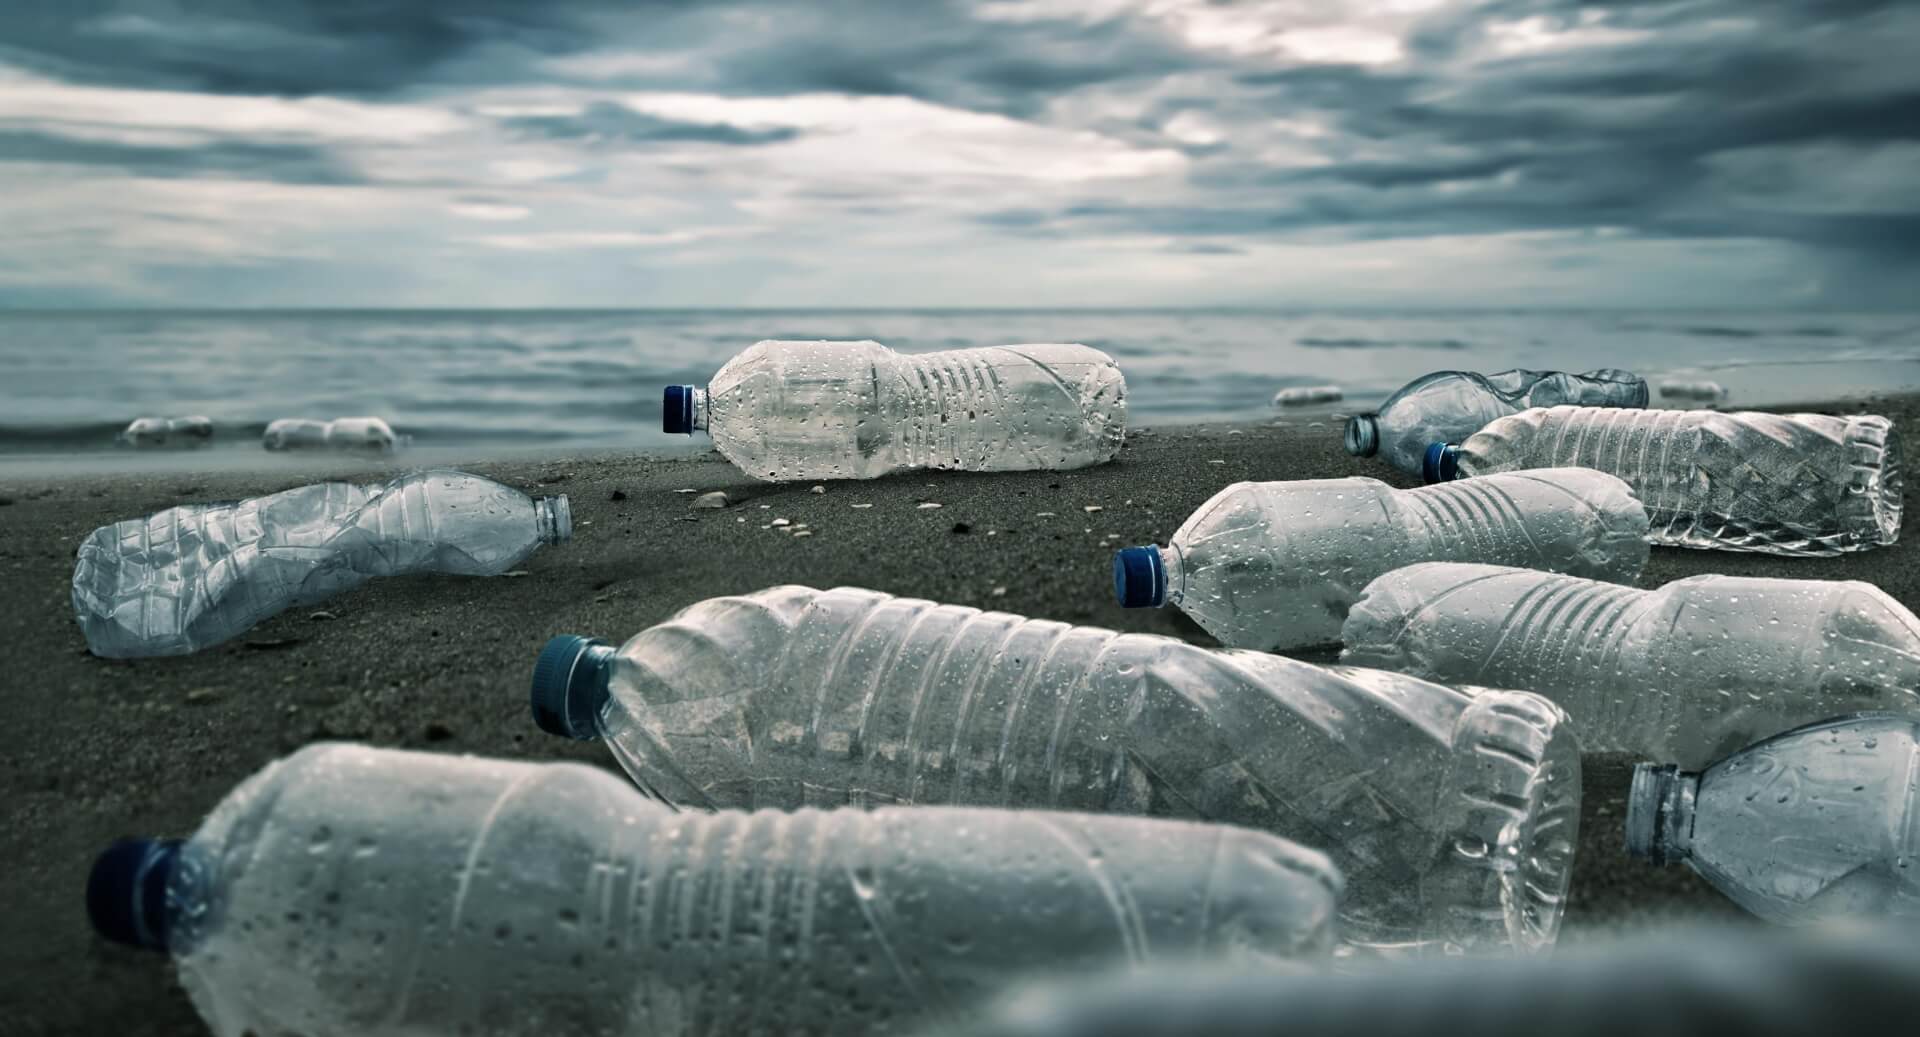 plastik wielka brytania|efekt attenborough plastik wielka brytania|climate change the facts efekt attenborough plastik wielka brytania|efekt attenborough plastik wielka brytania